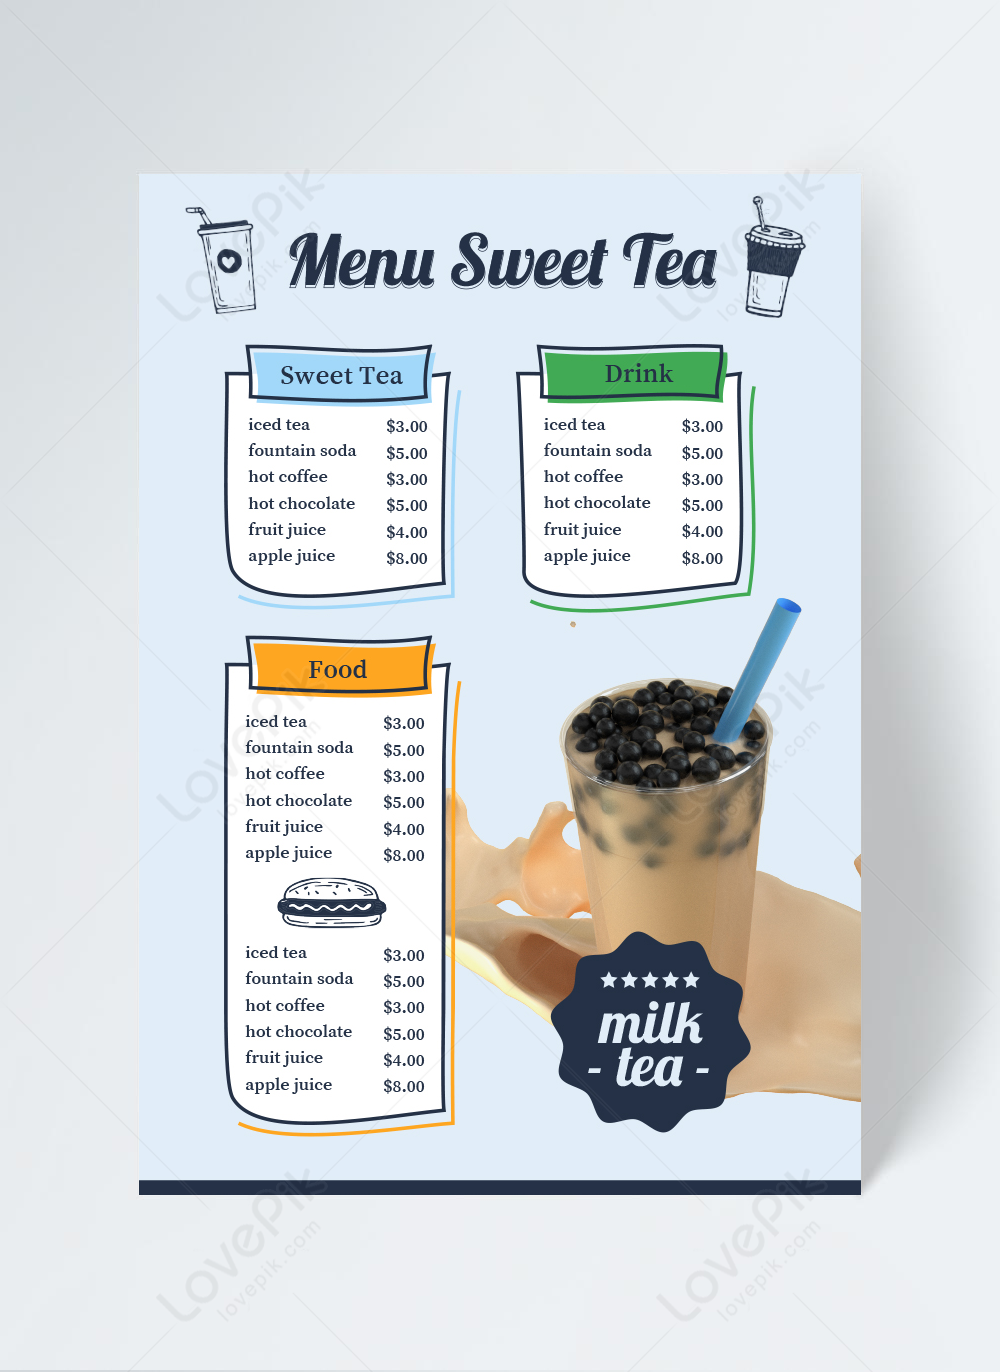 refreshing-milk-tea-menu-template-image-picture-free-download-465490274